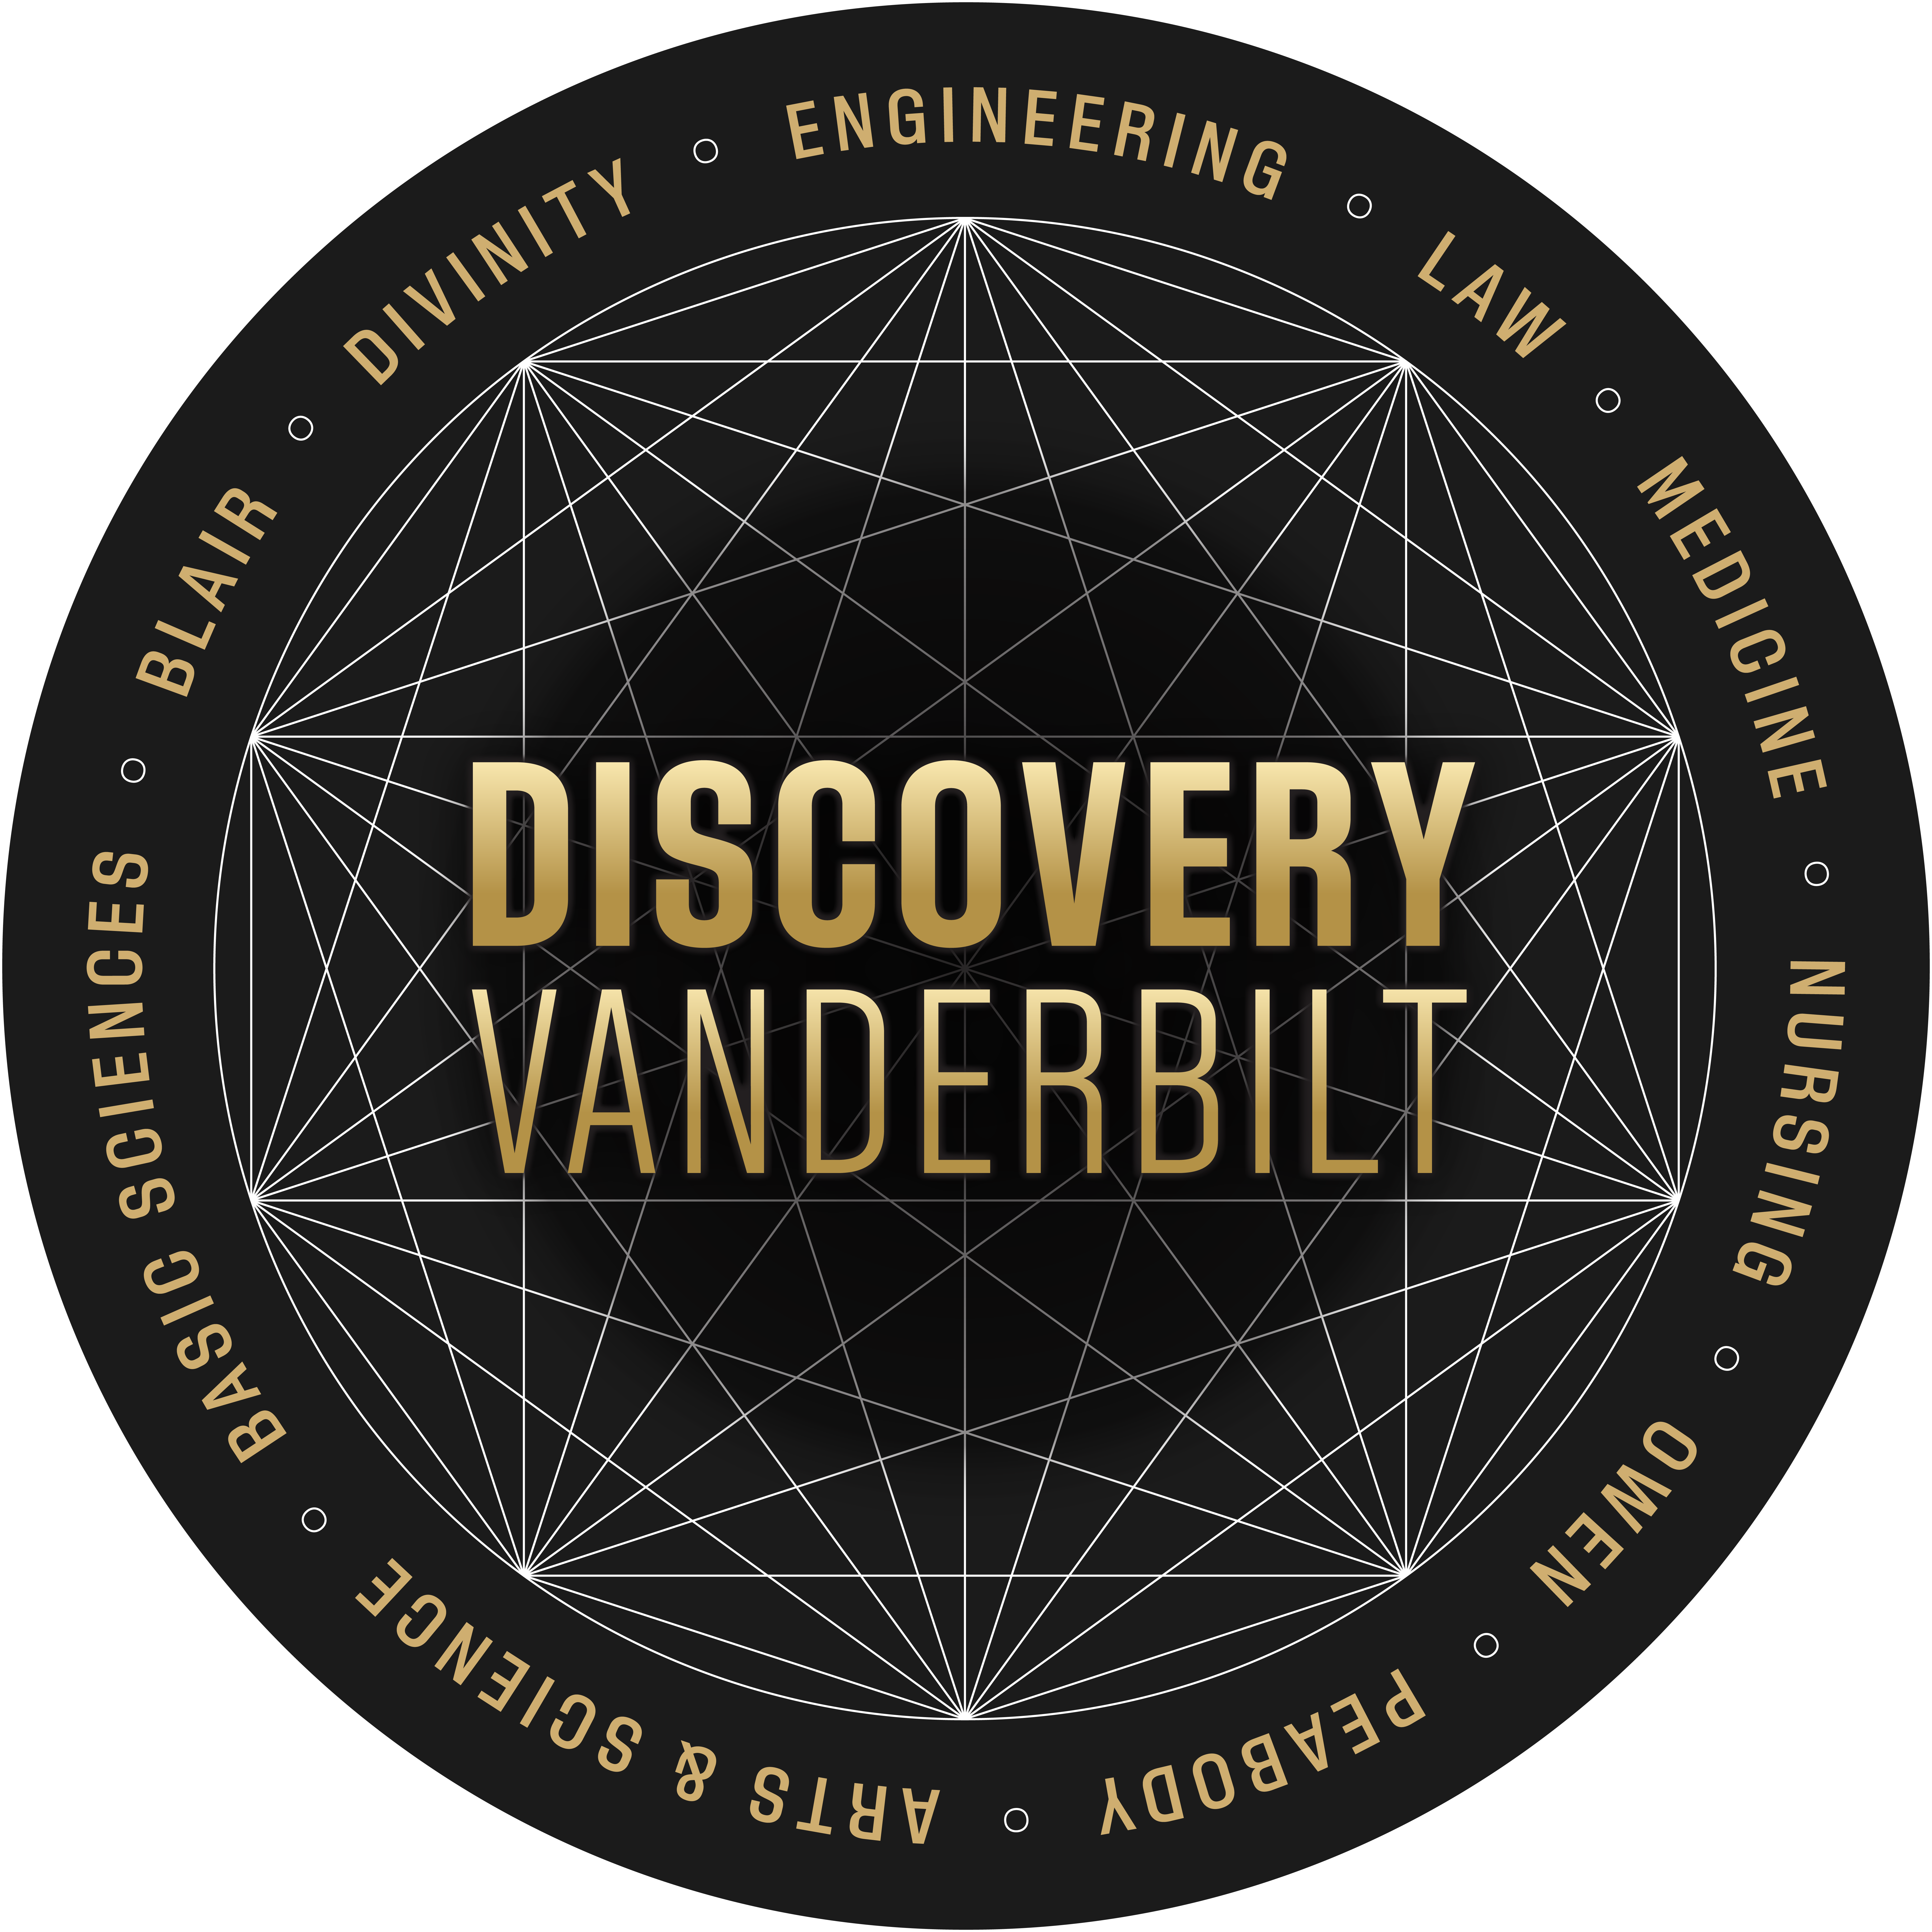 Discovery Vanderbilt sends research soaring